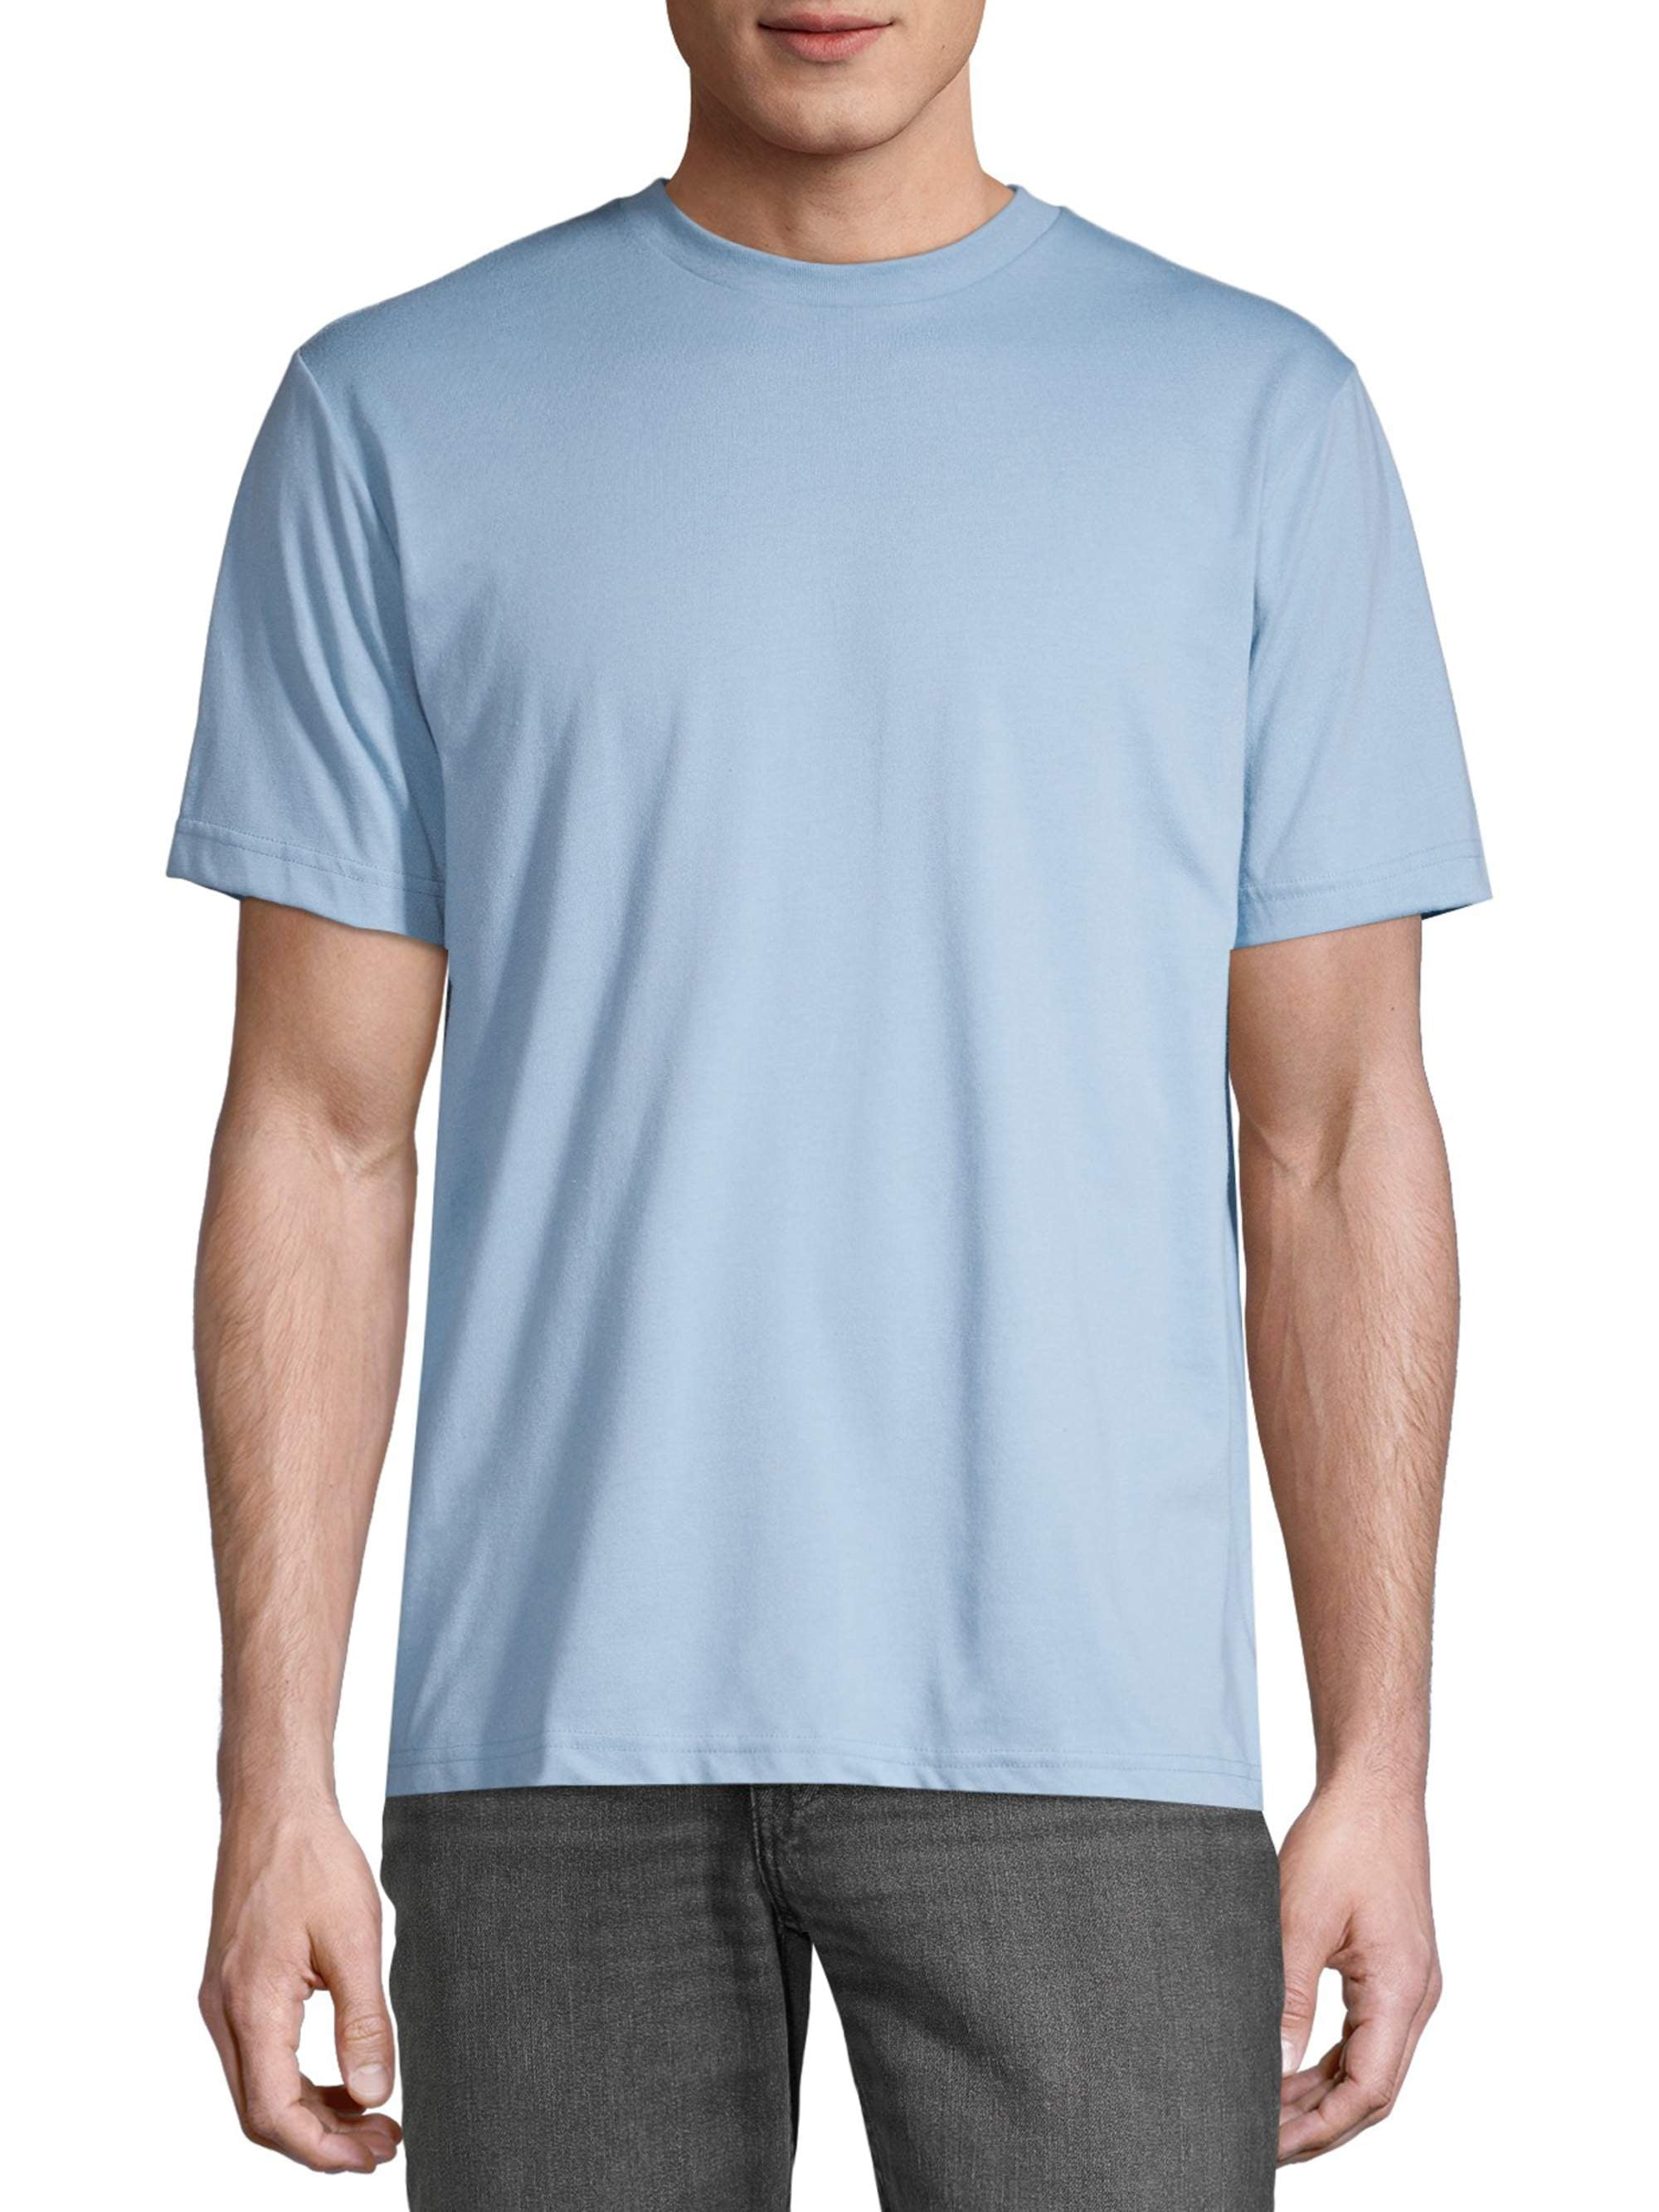 George Men's Textured Crew Tee Shirt MEDIUM 38-40 Navy Blue Super Soft 